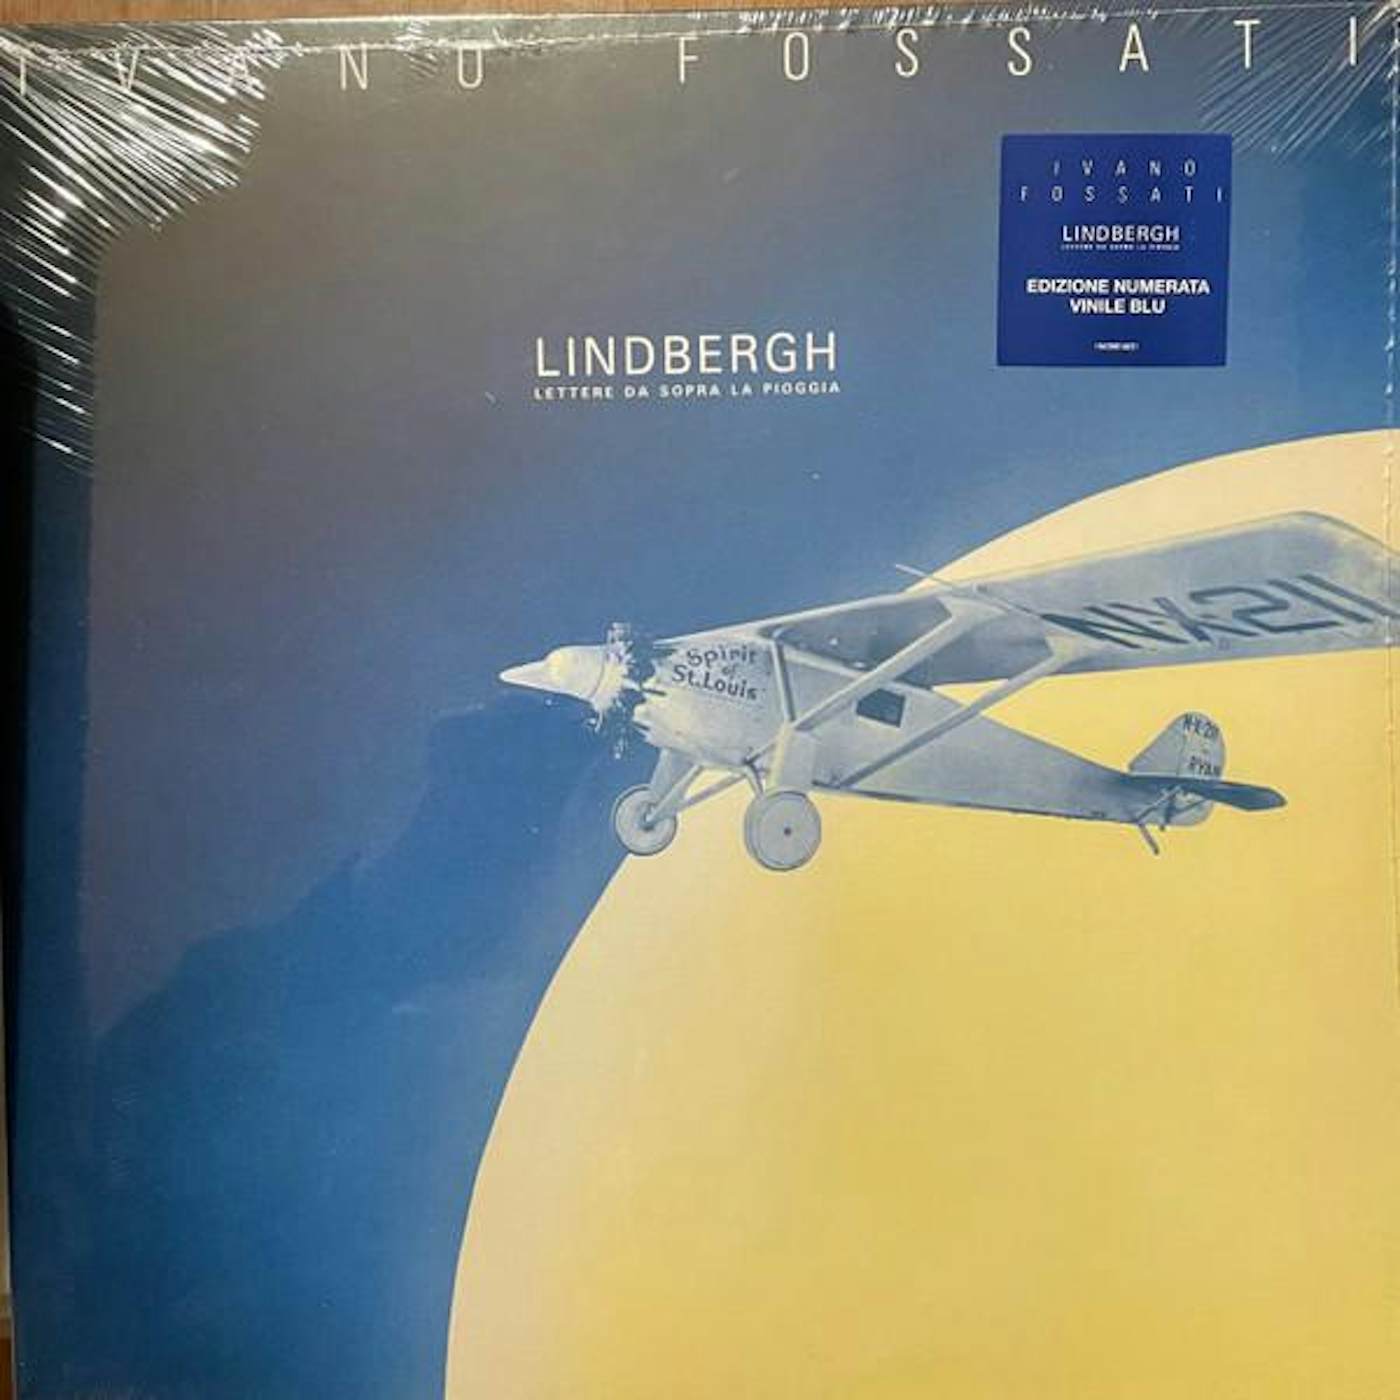 Ivano Fossati Lindbergh Vinyl Record